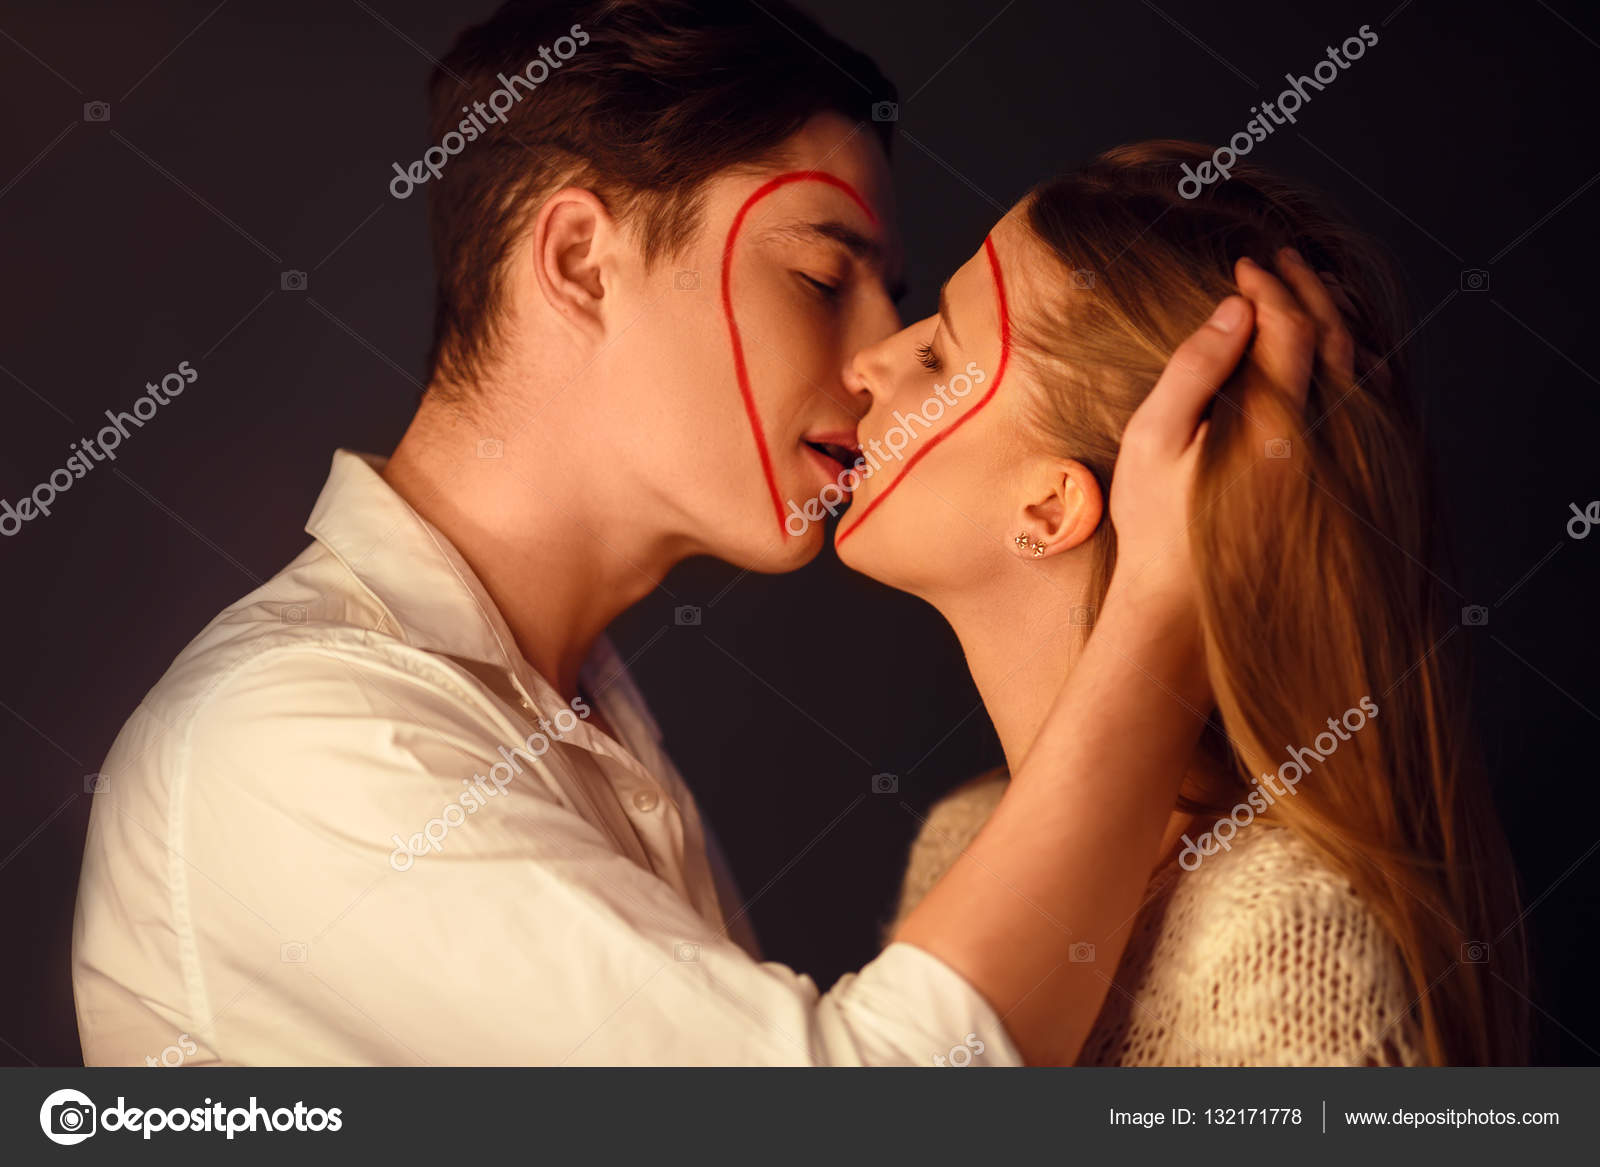 Kissing Poses - Couple walking kissing pose | PoseMy.Art